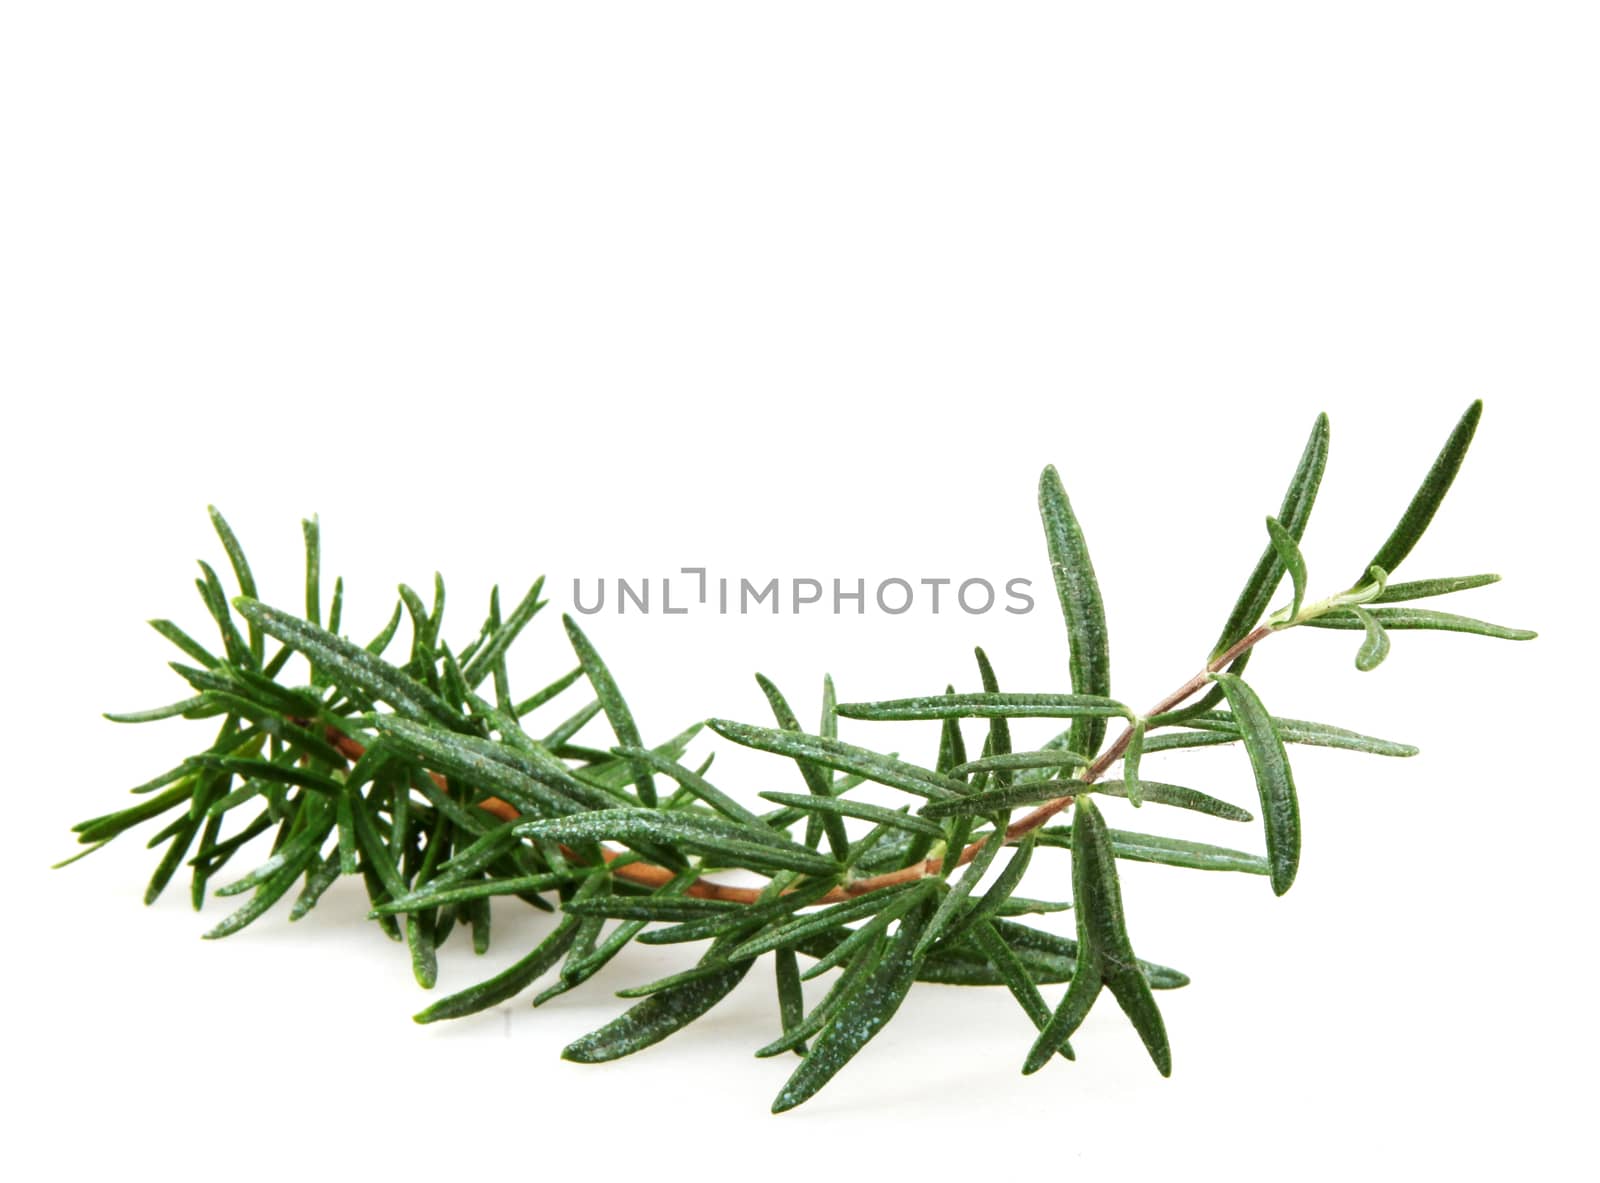 Fresh Rosemary Herb On White Background by nenovbrothers